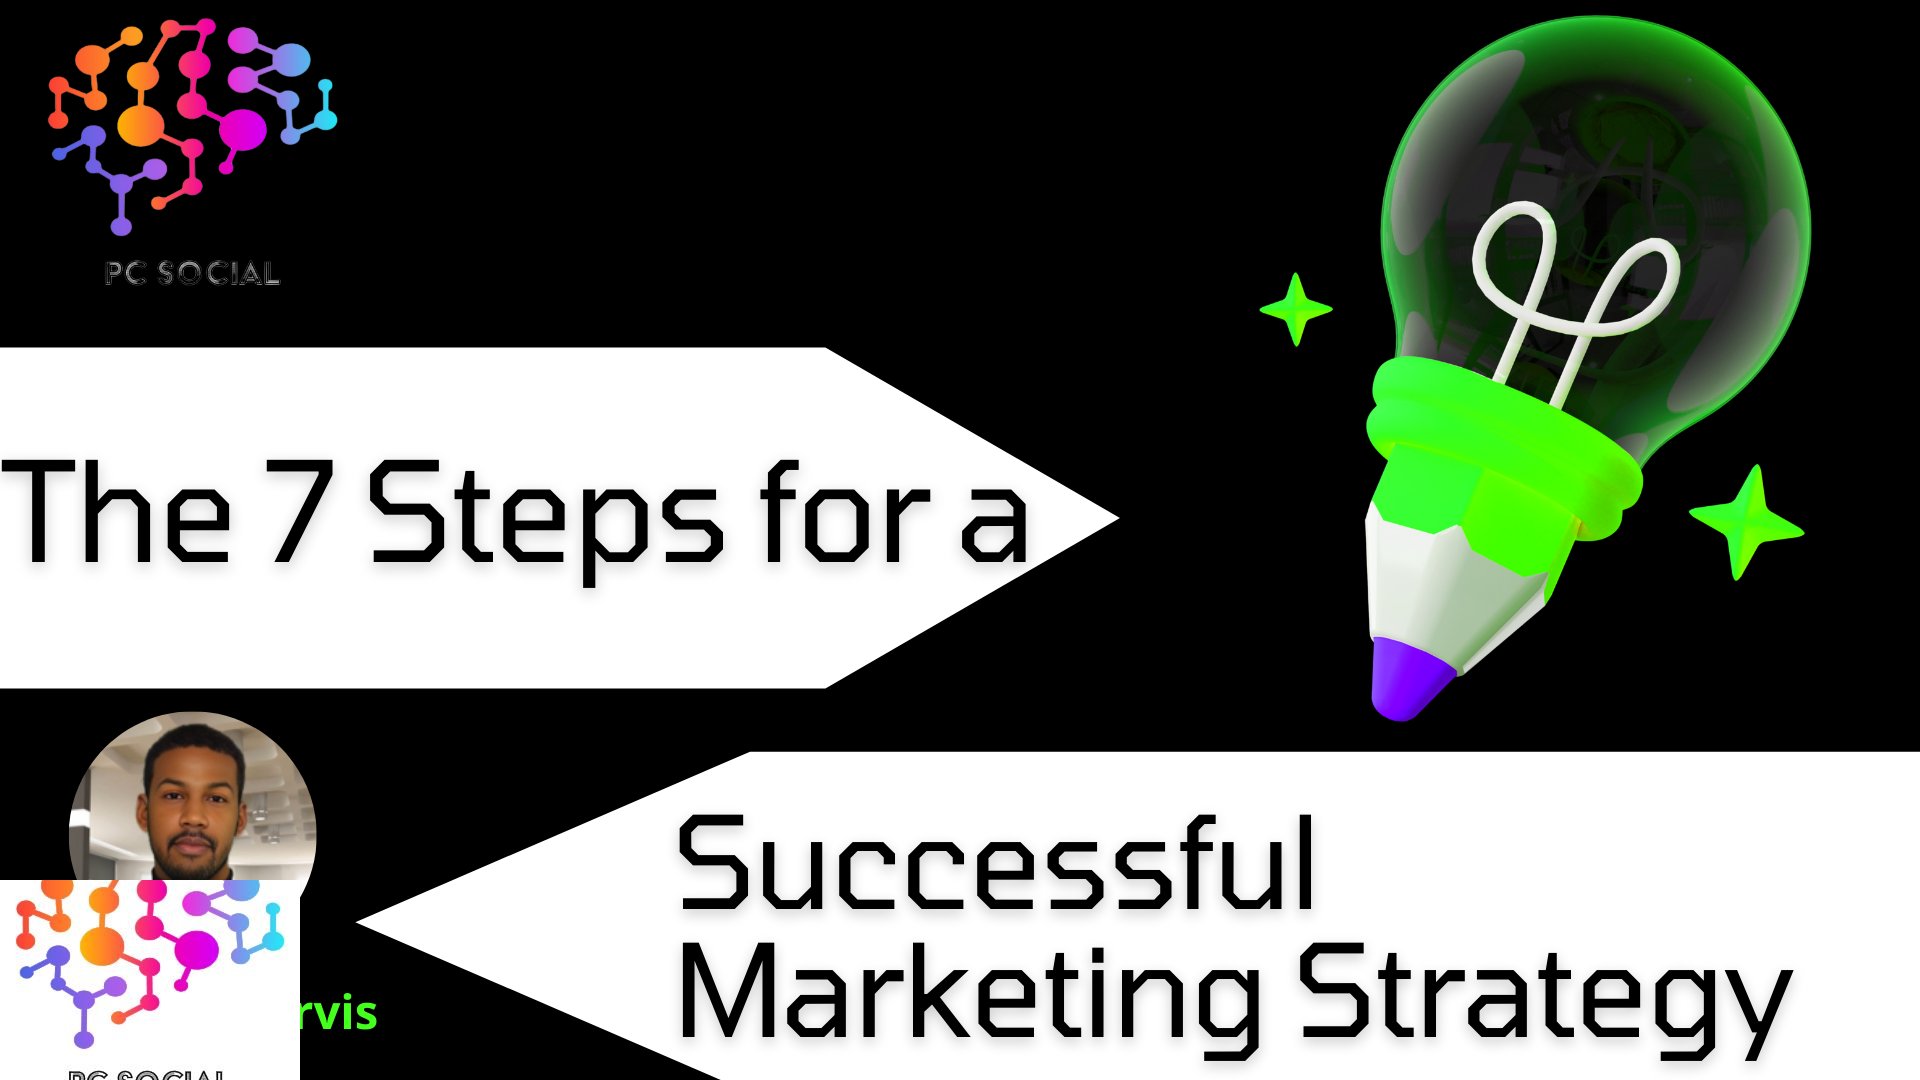 Marketing, Data, Insights, Marketing Campaign, Market Research, Target Market, Customer Journey